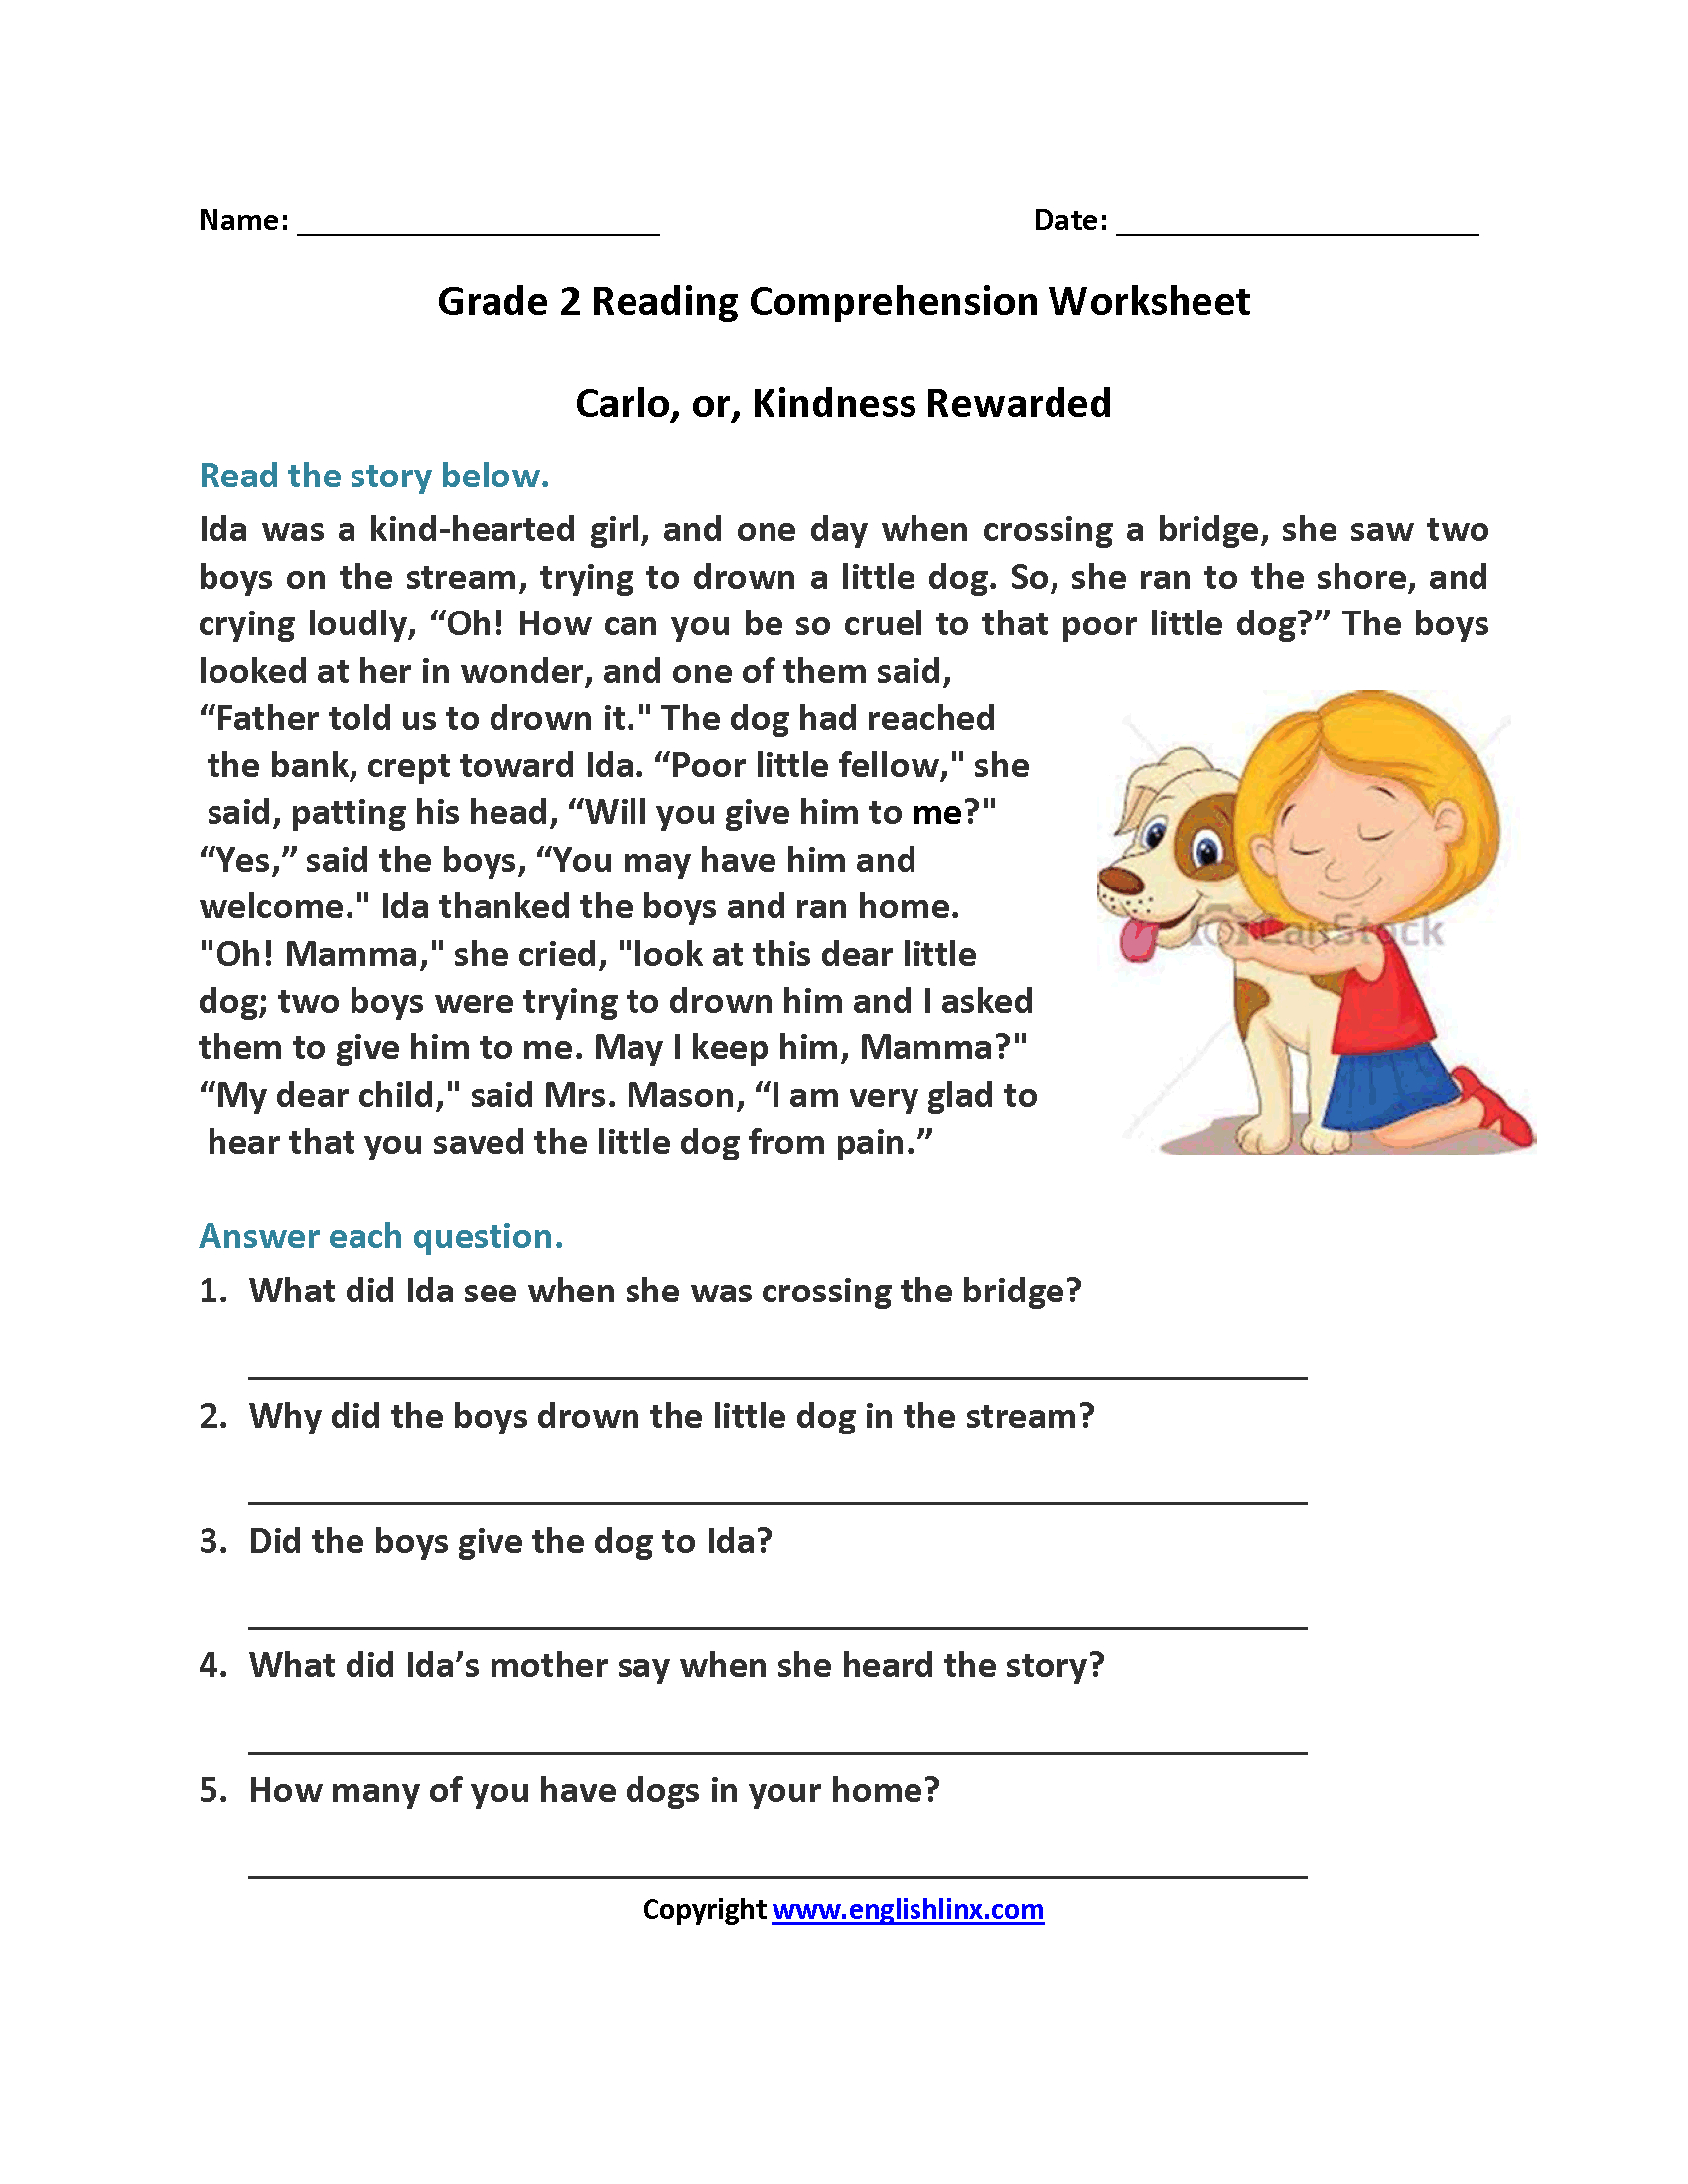 Carlo Or Kindness Rewarded Second Grade Reading Worksheets | Reading - Third Grade Reading Worksheets Free Printable